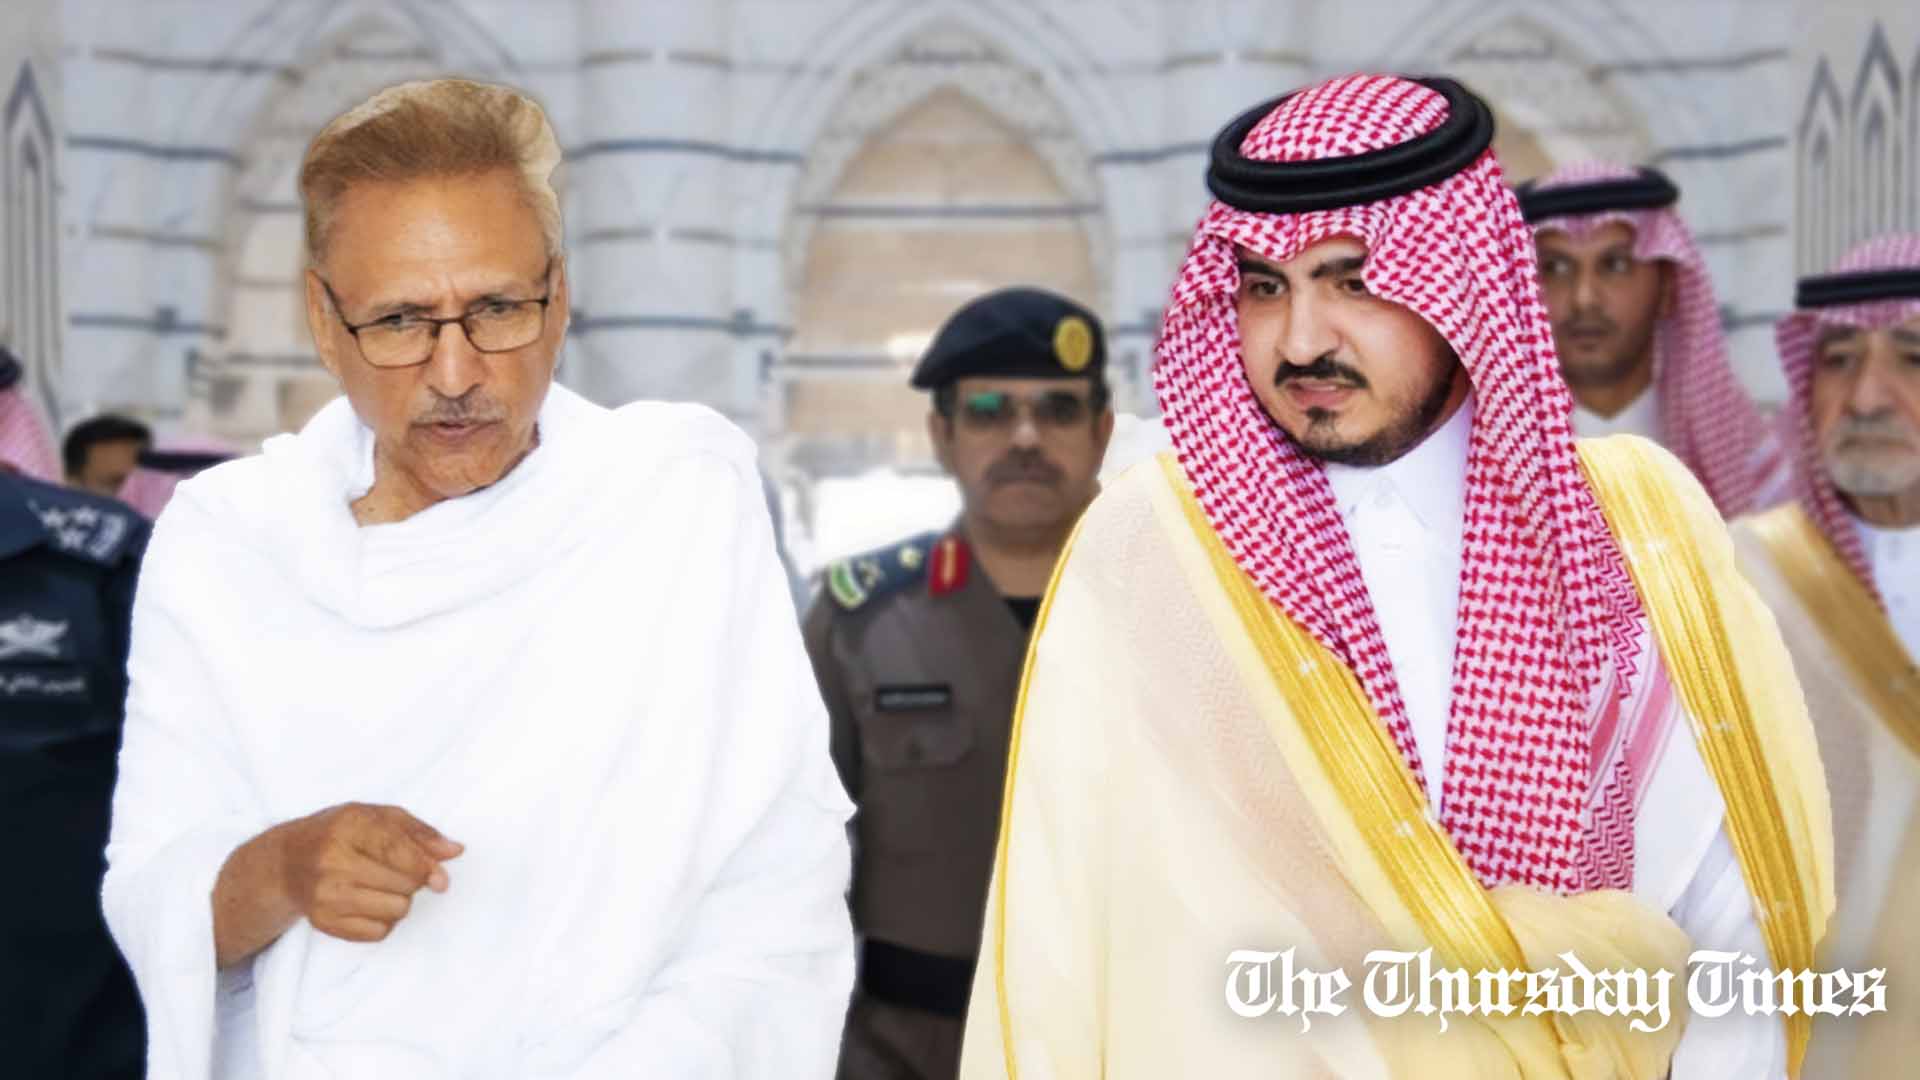 A file photo of Pakistani president Arif Alvi is shown at Jeddah. — FILE/SAUDI PRESS AGENCY